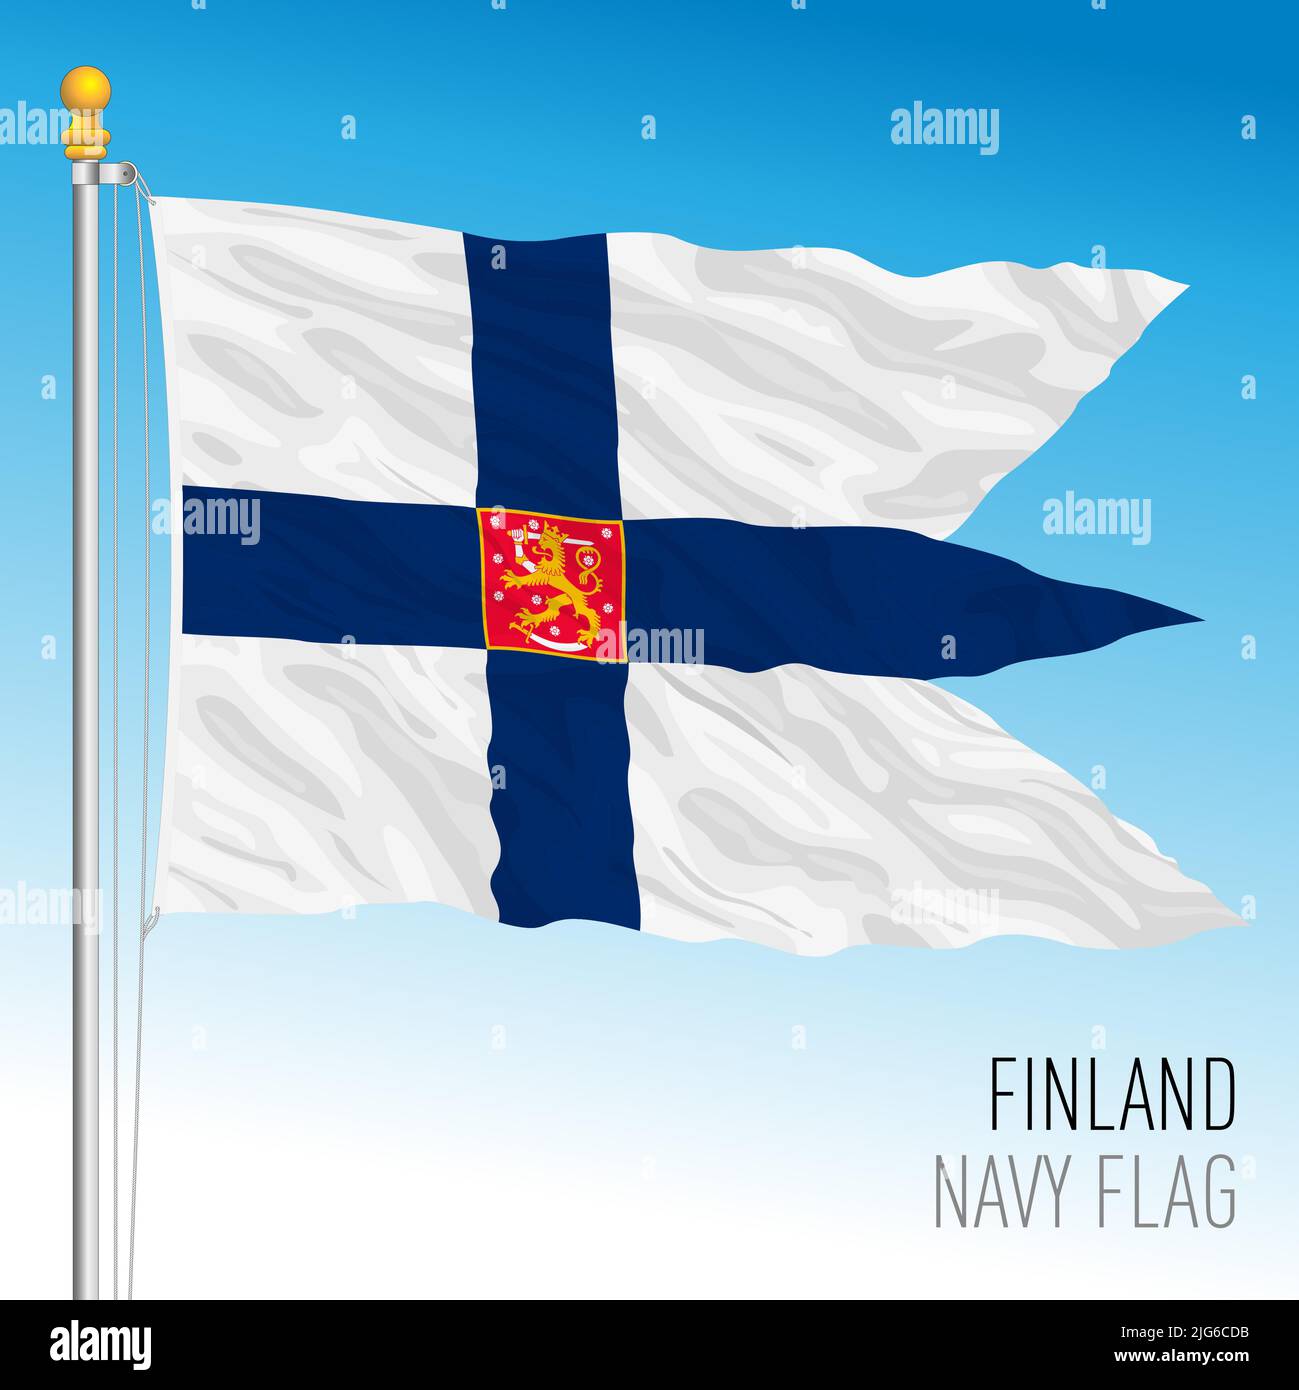 Finland official Navy flag, Republic of Finland, European Union, vector illustration Stock Vector